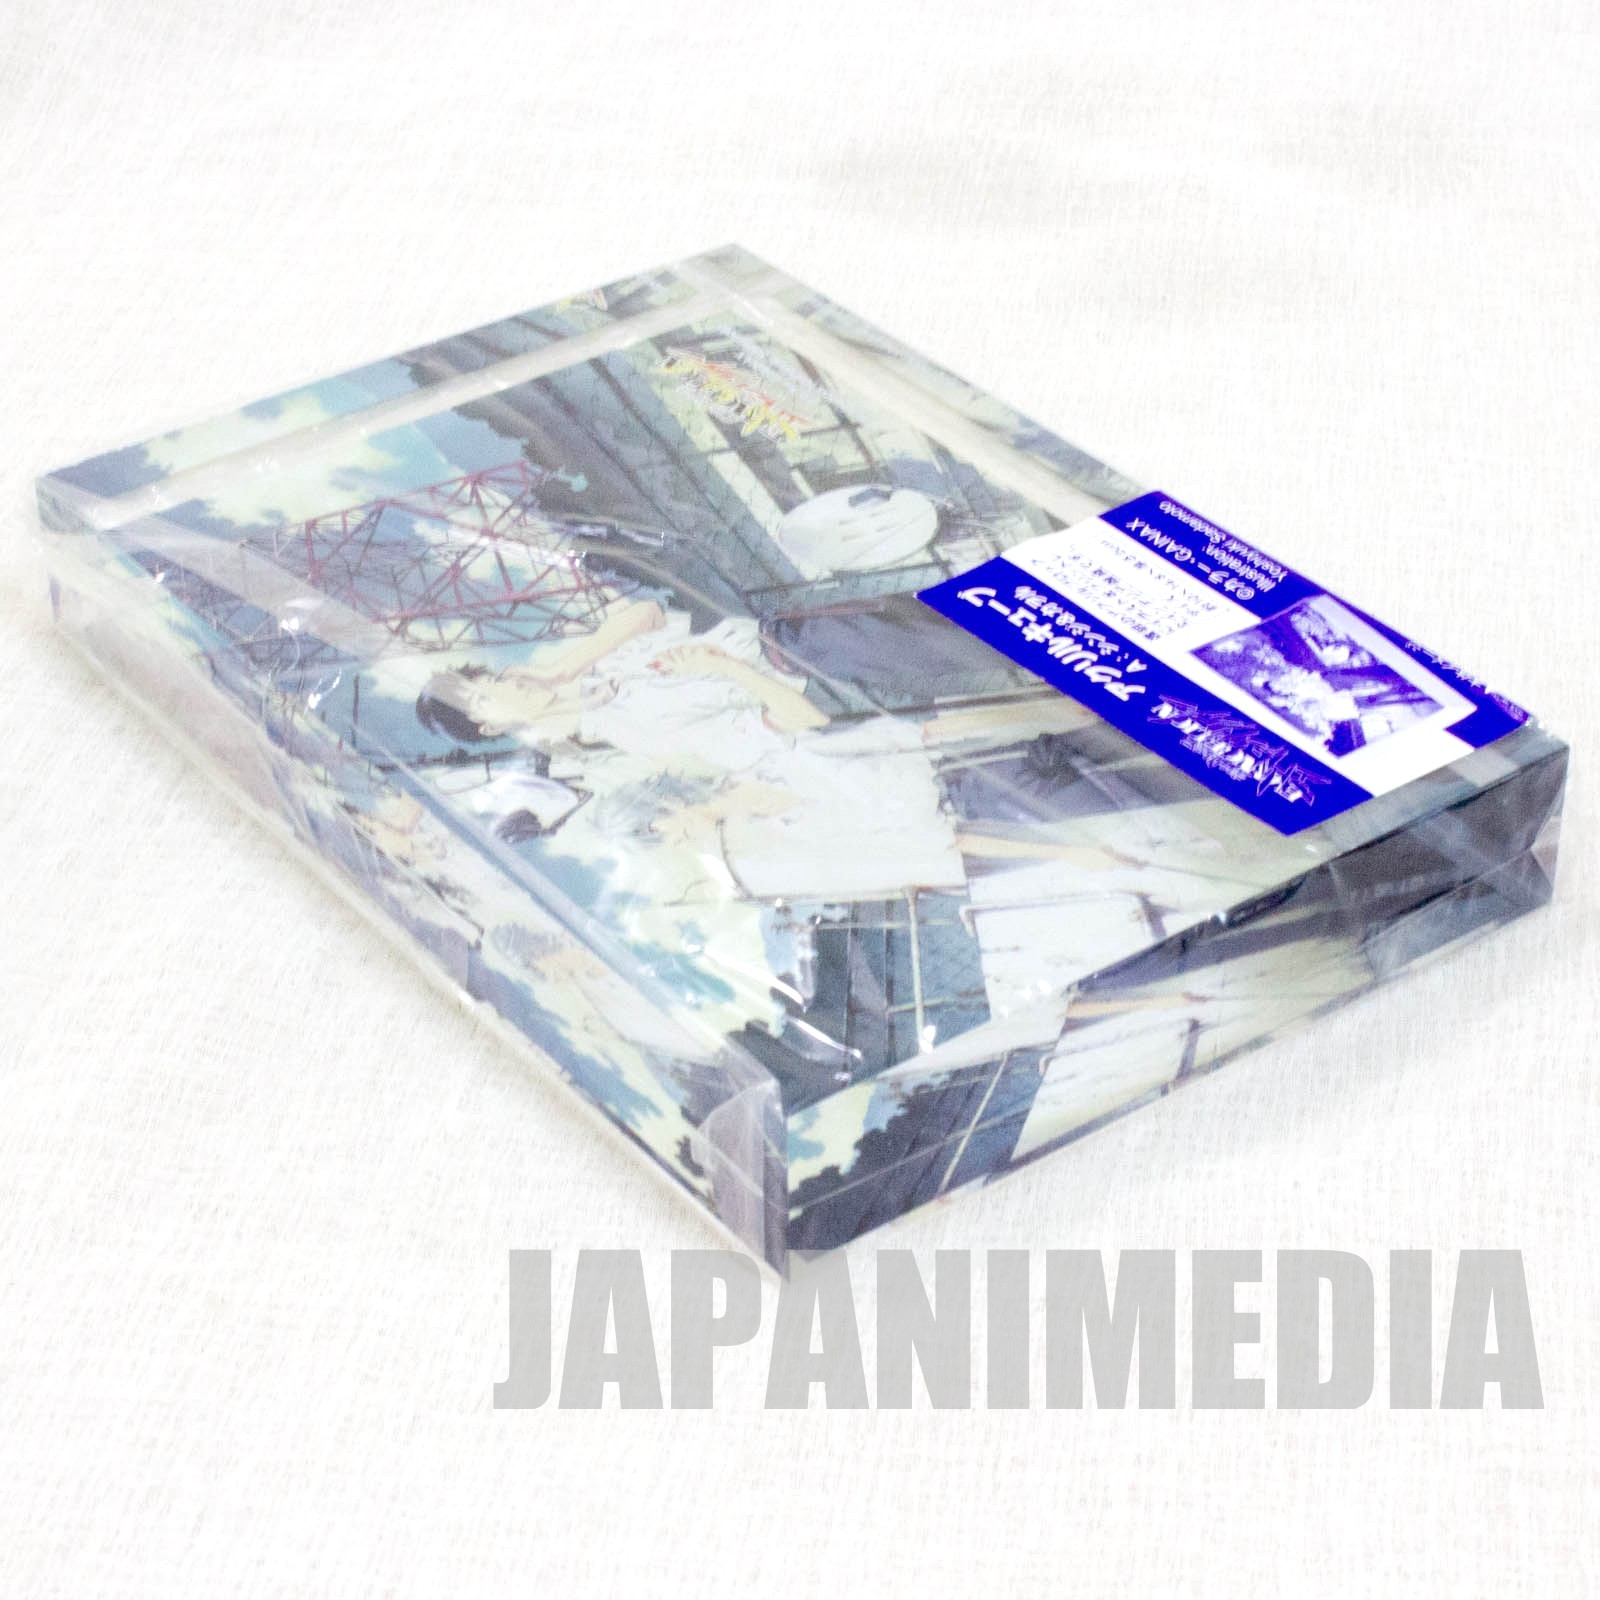 Evangelion Shinji & Kaworu Illustration Acrylic cube JAPAN ANIME